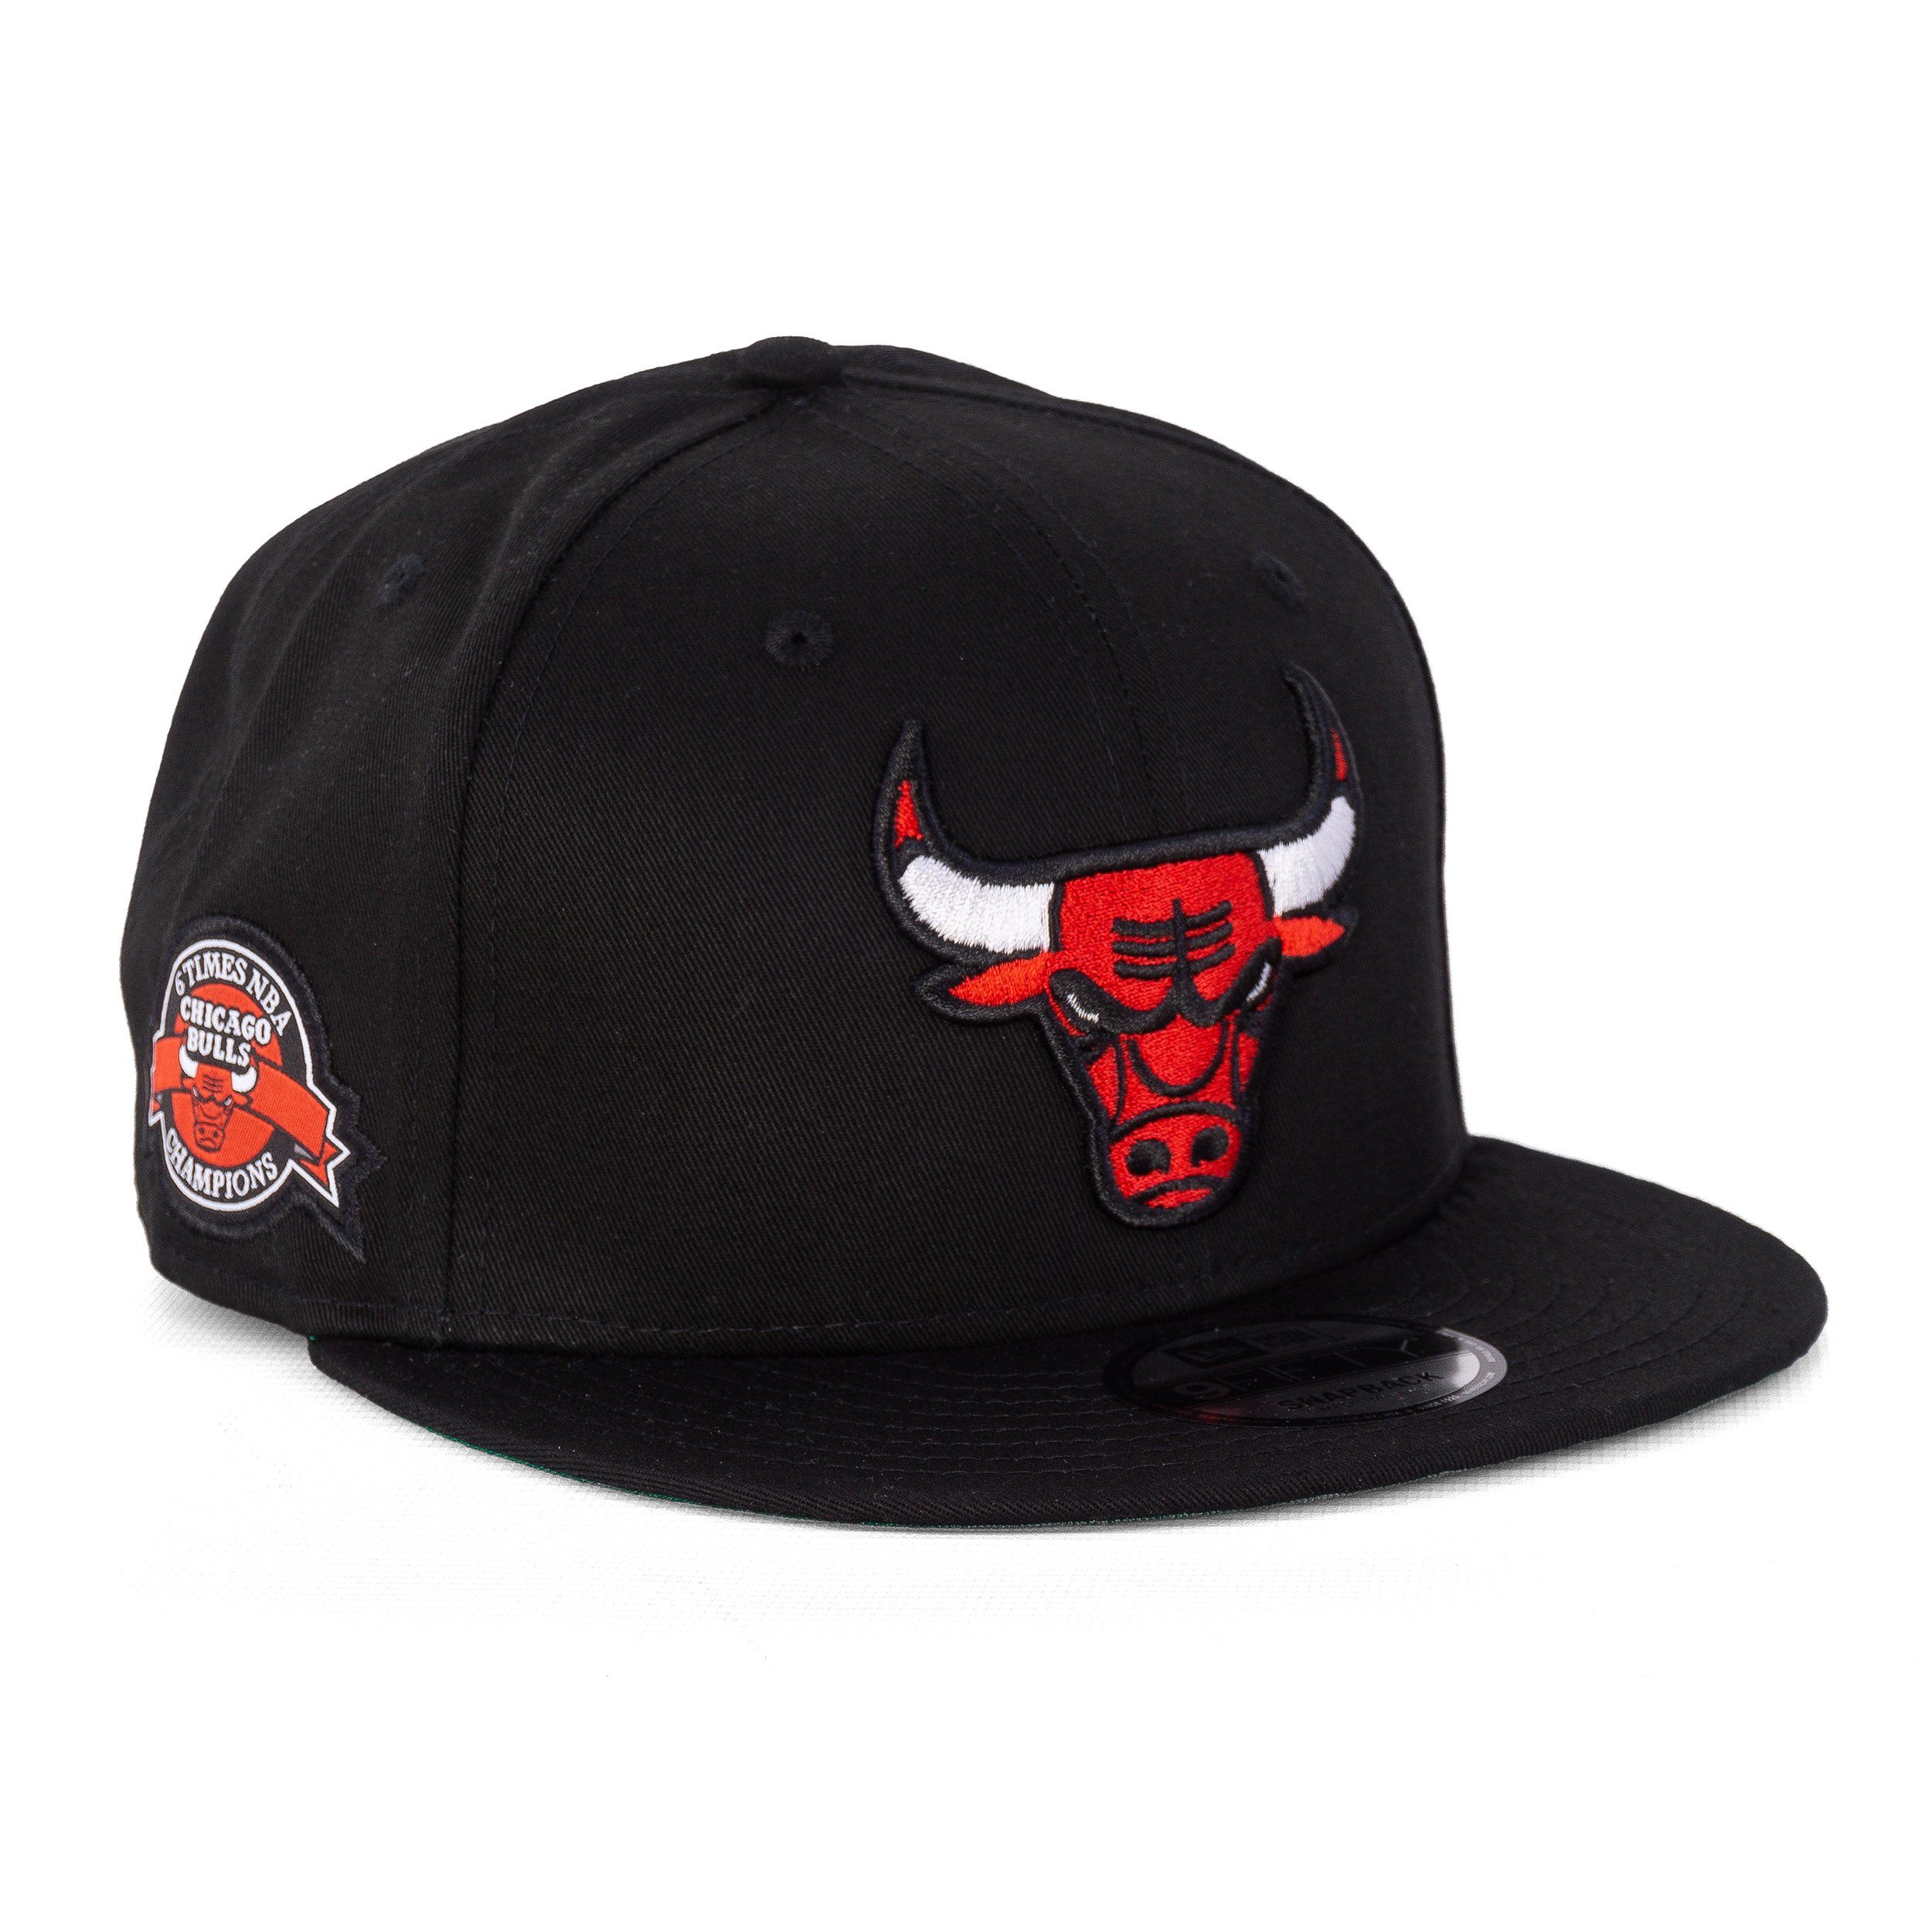 Era Baseball New Cap Era New Bulls 9Fifty Cap Chicago NBA